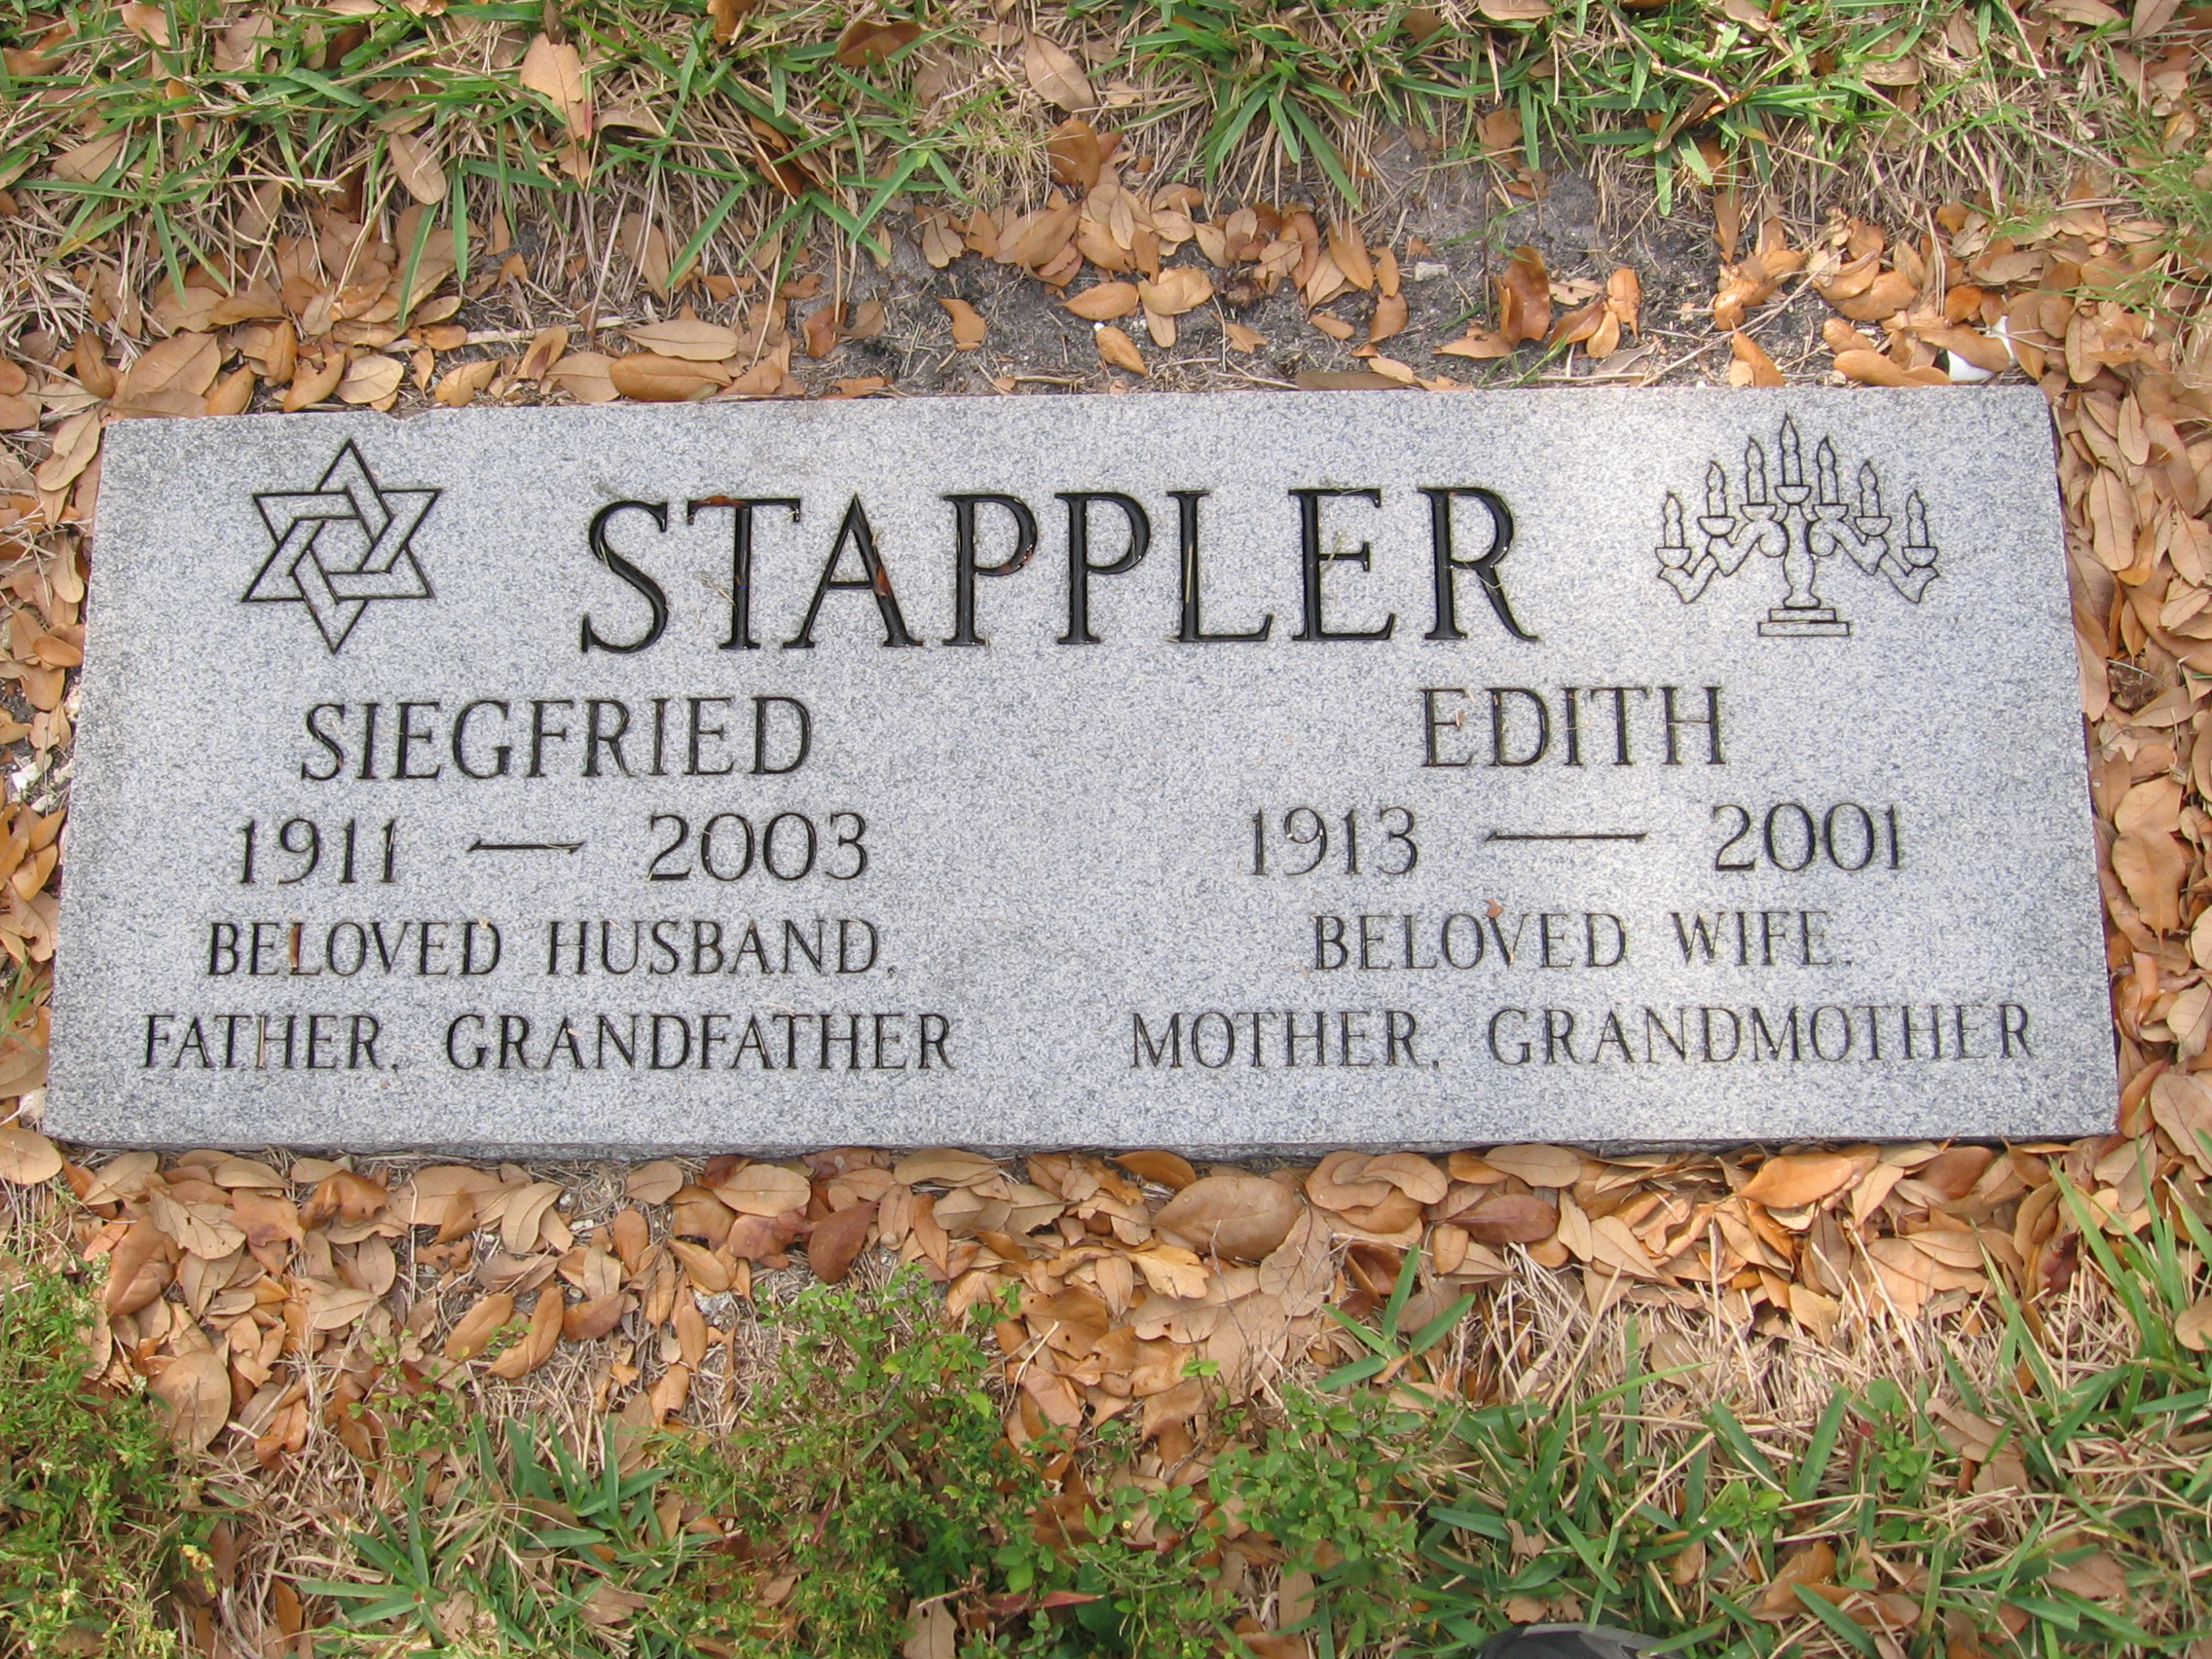 Siegfried Stappler